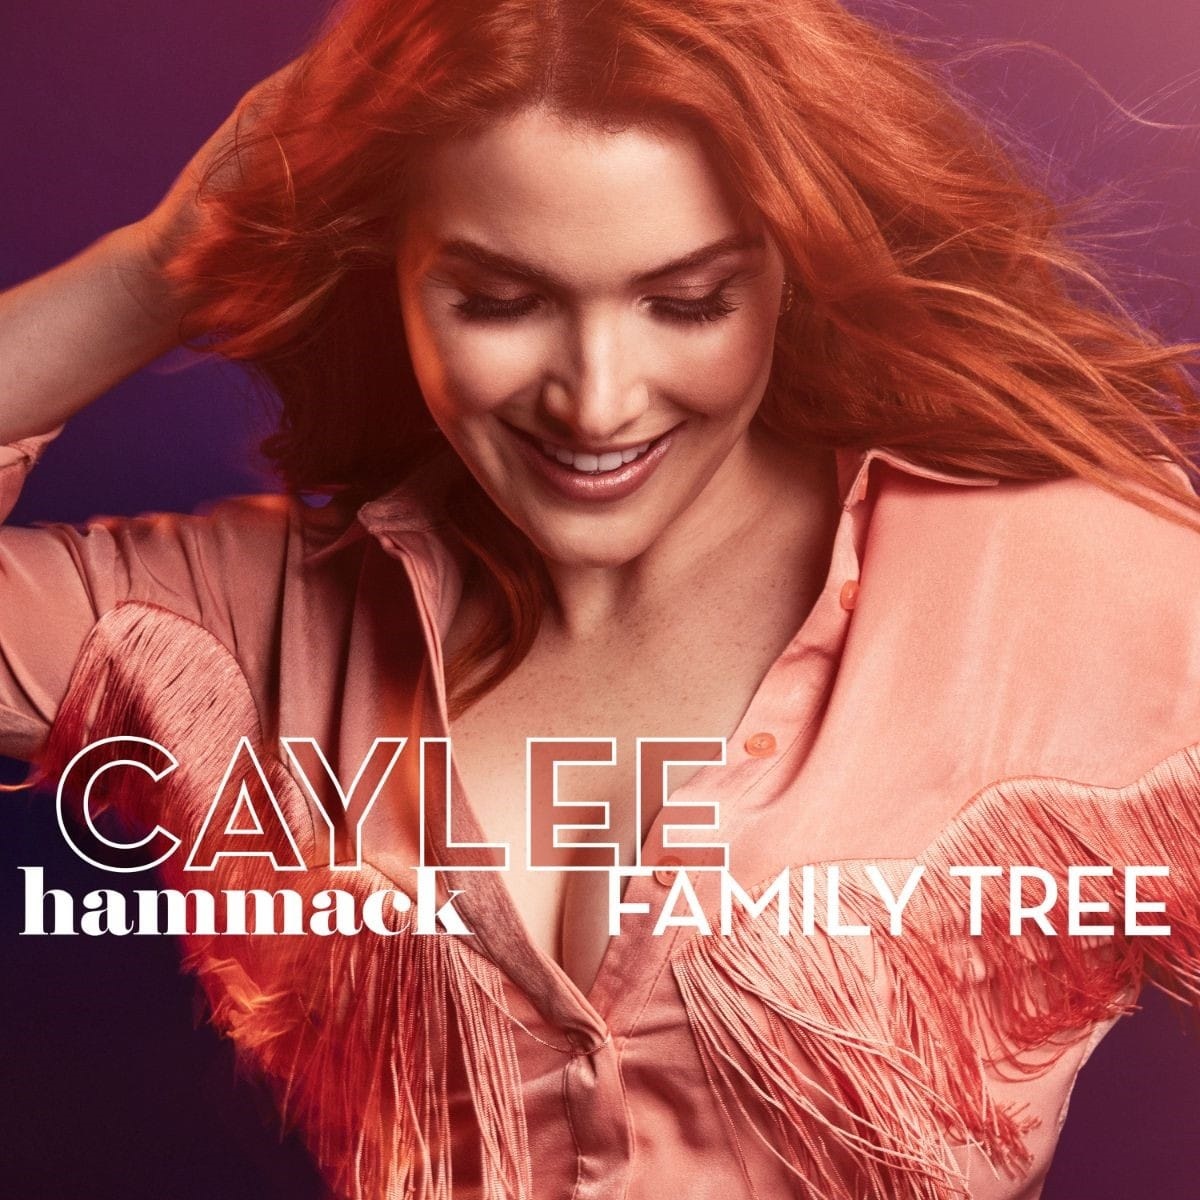 Listen To Caylee Hammack’s Upbeat Debut Single ‘Family Tree’